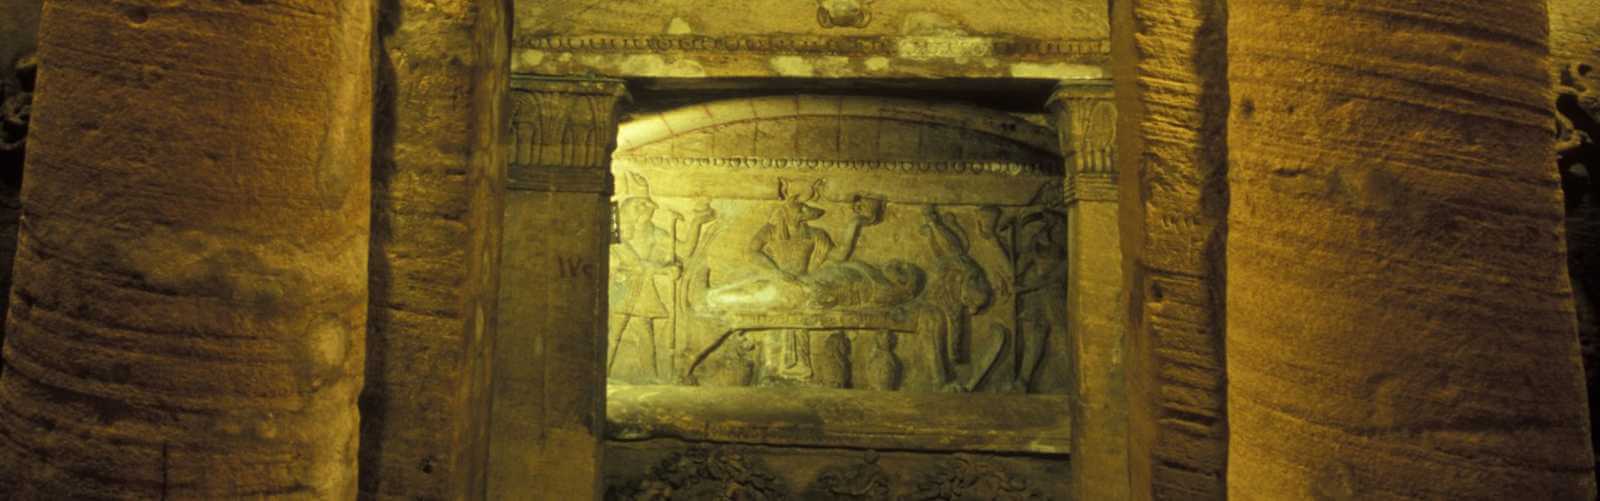 Catacombs Of Kom El Shoqafa